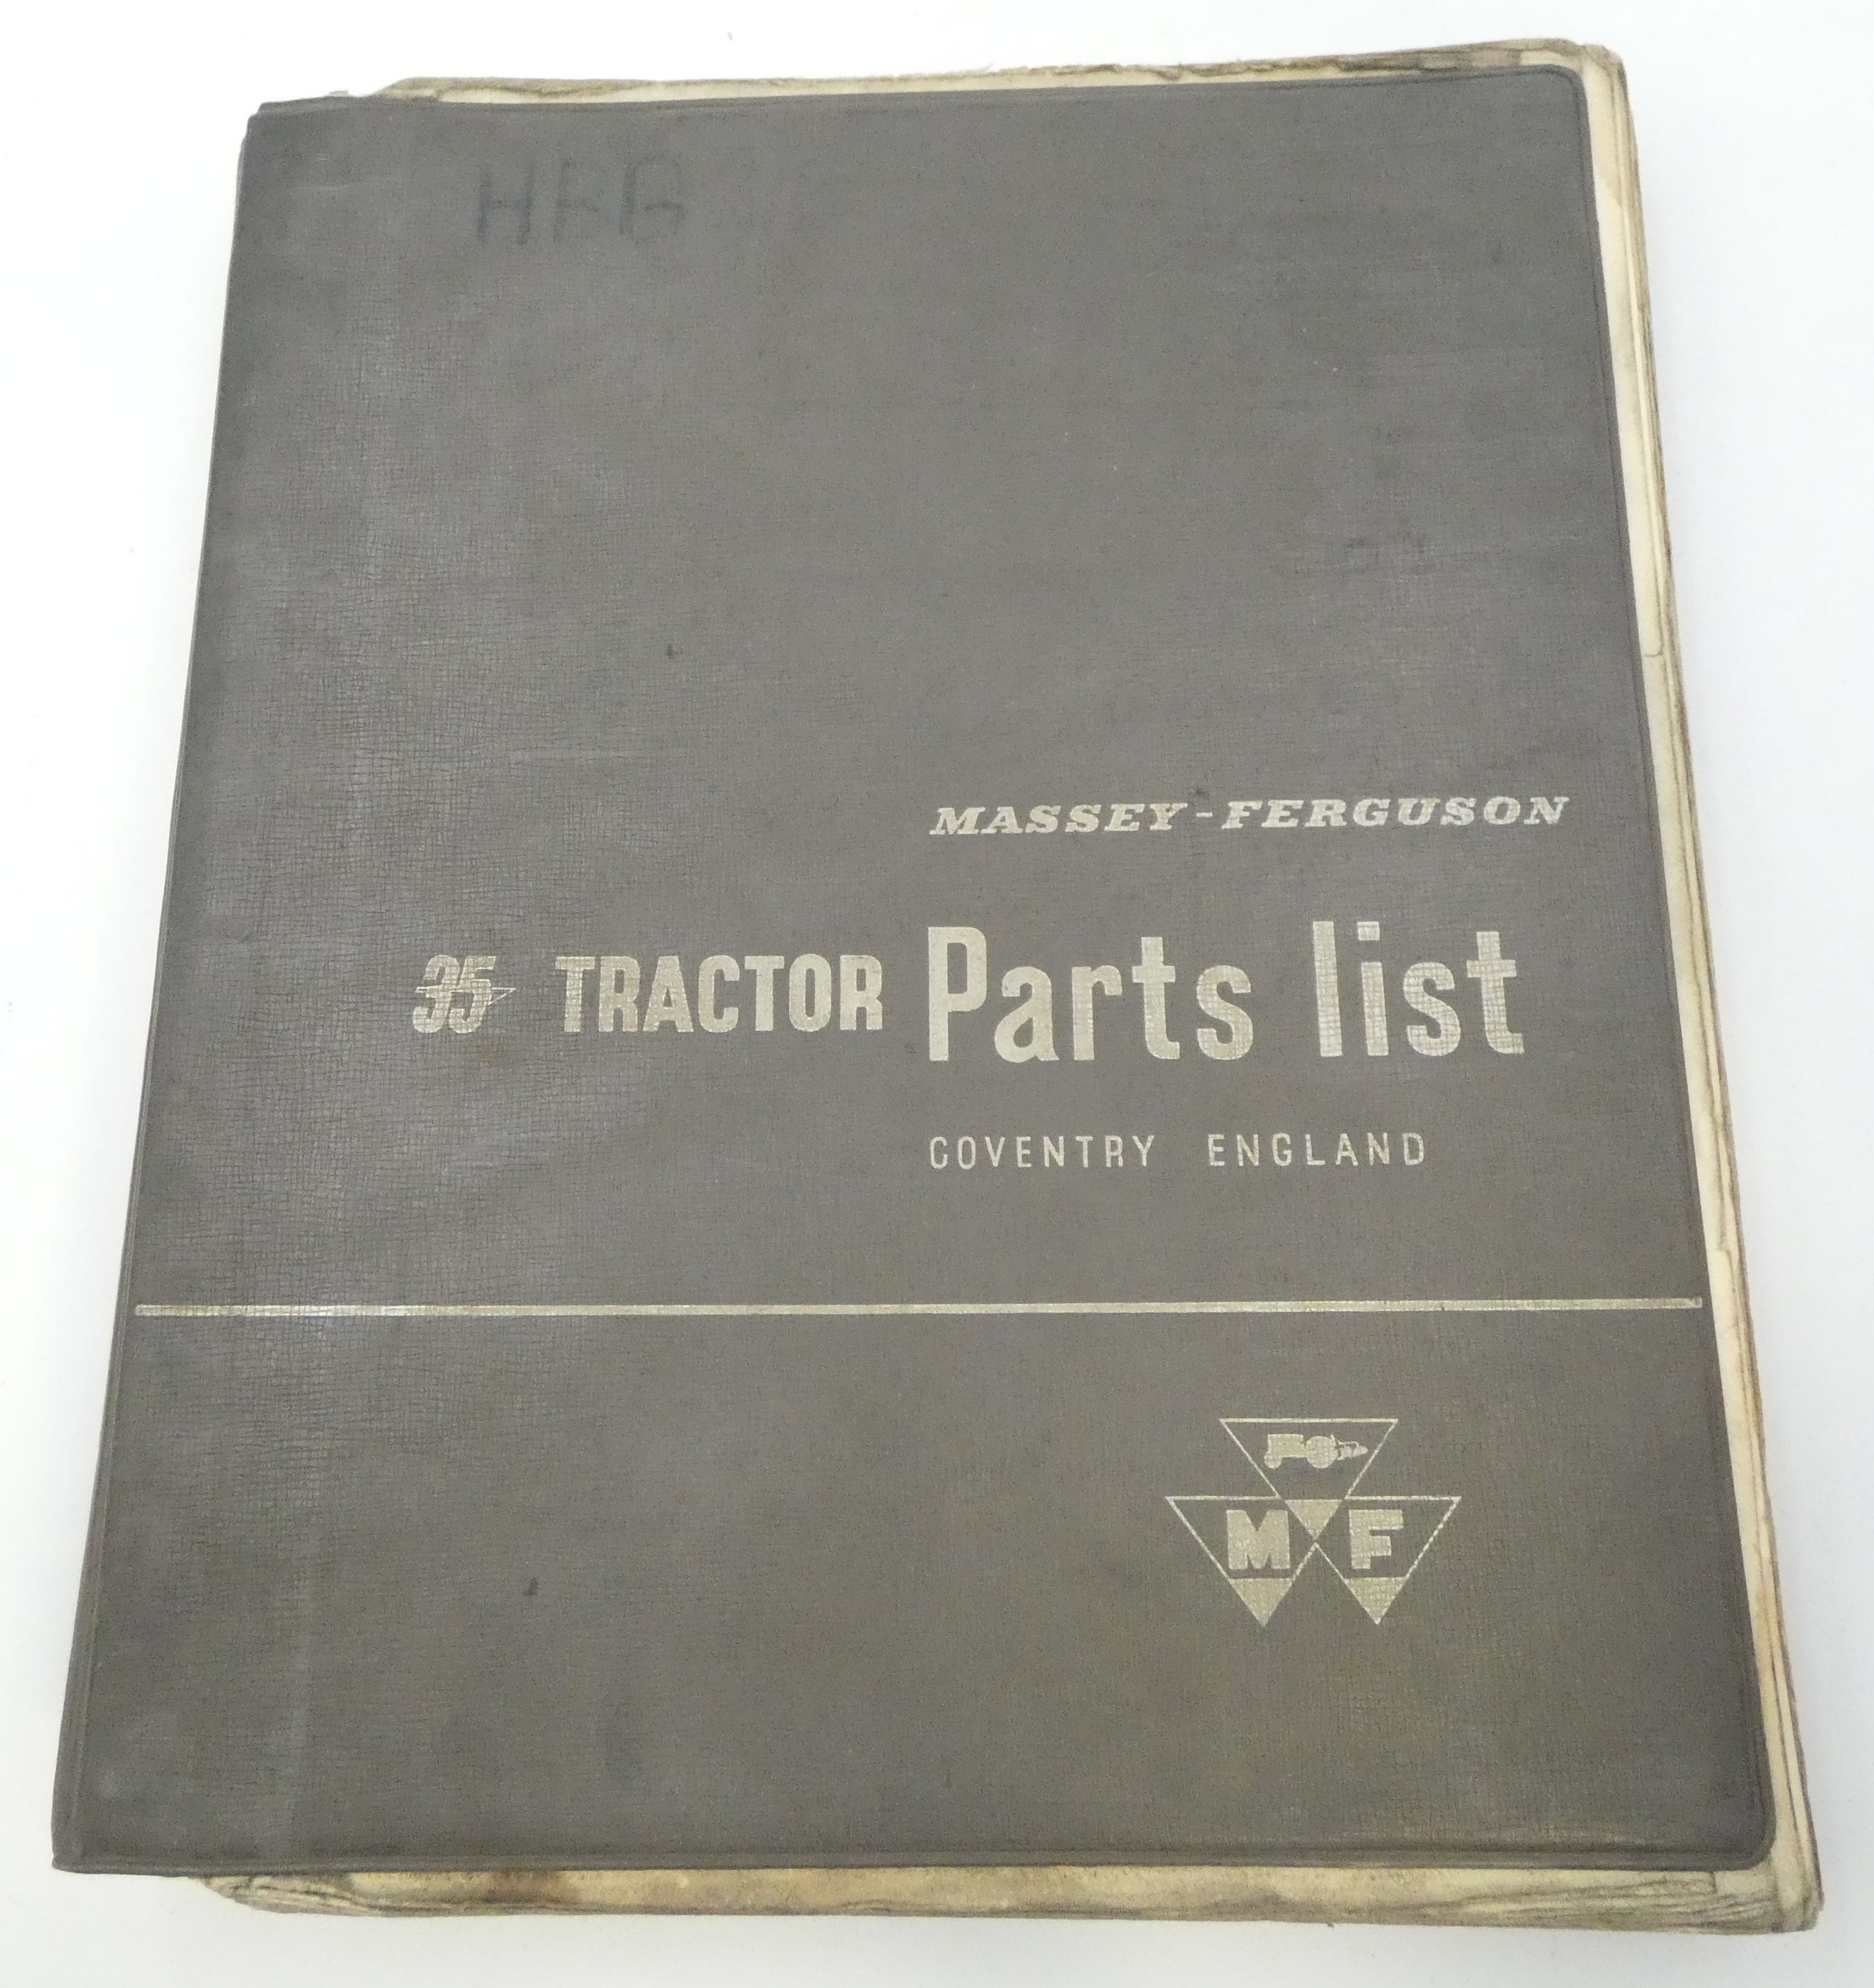 Massey-Ferguson 35 tractor parts list